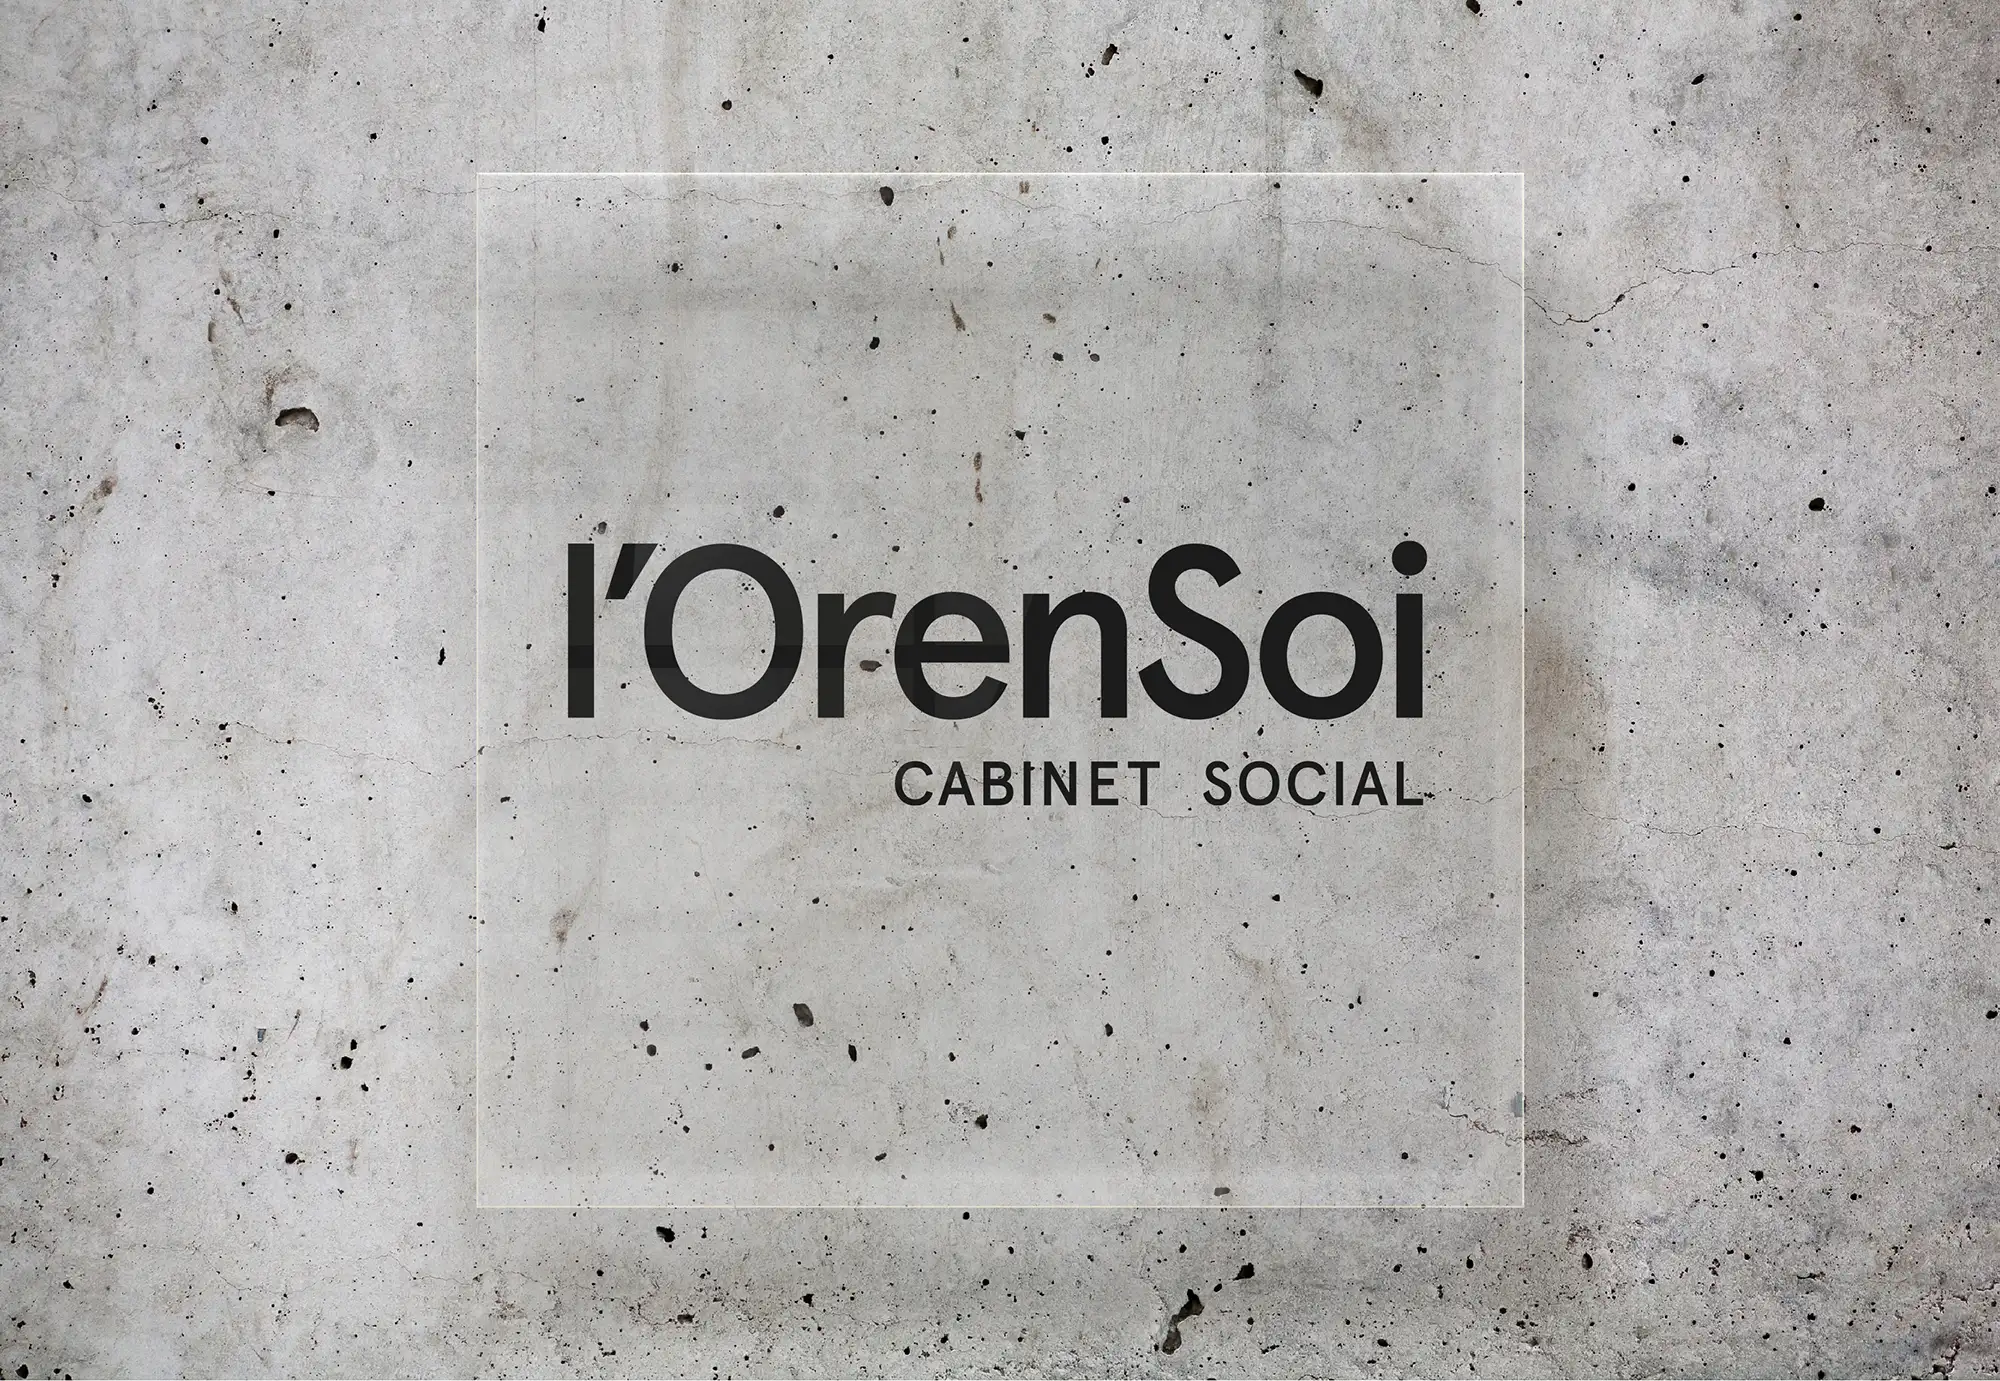 Lorensoi, le logo construit.